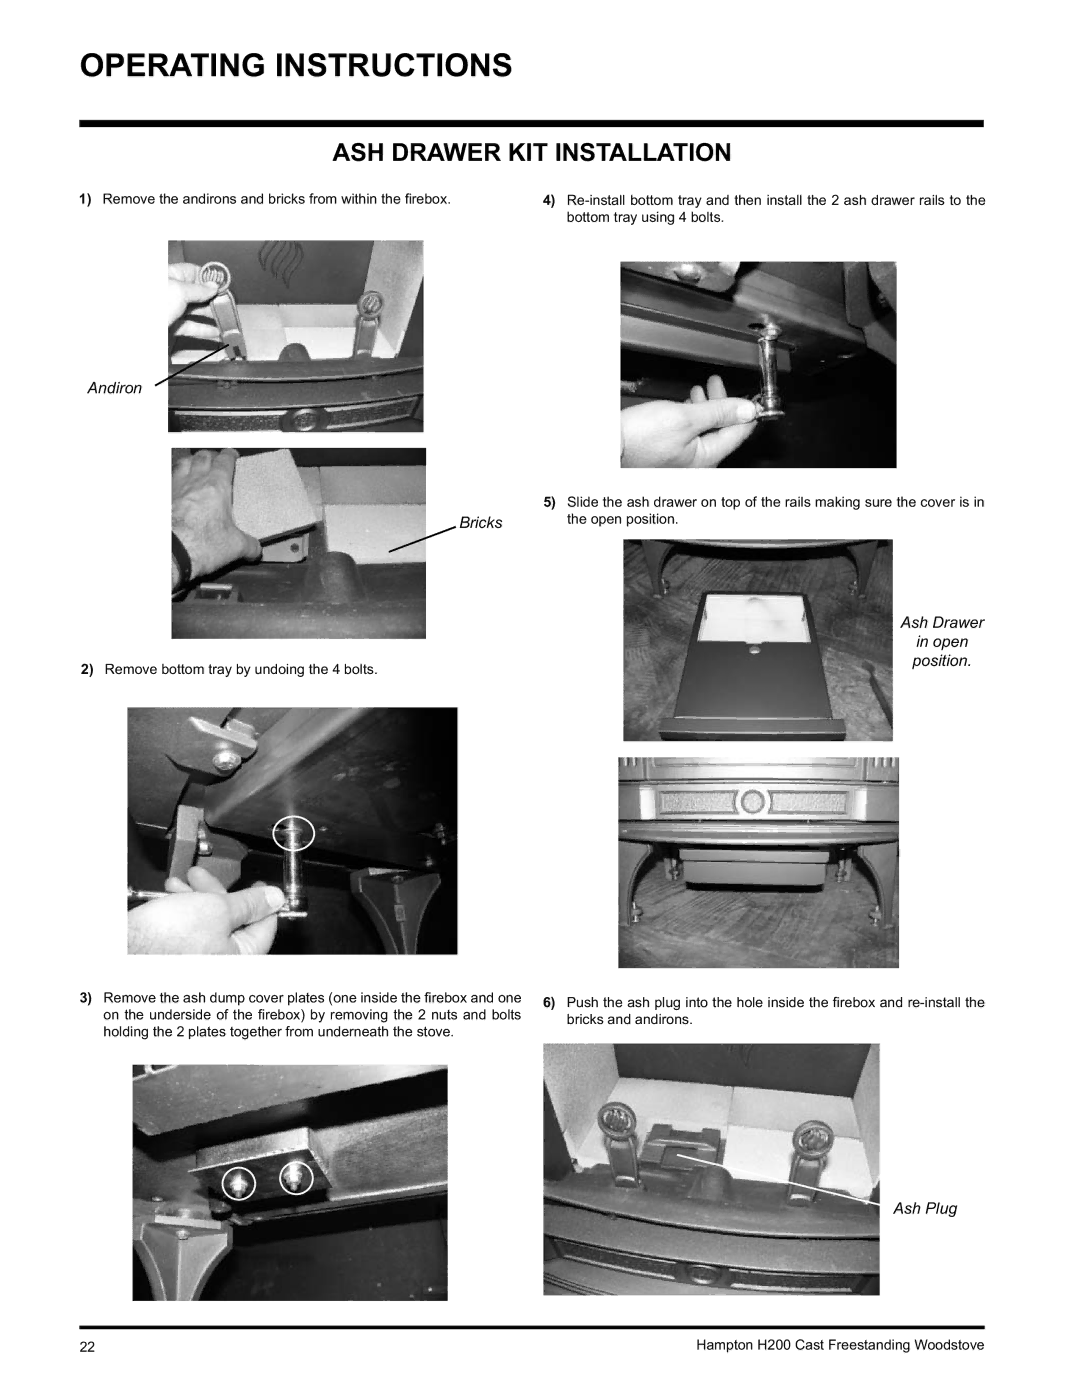 Hampton Direct H200 installation manual ASH Drawer KIT Installation, Open Position 